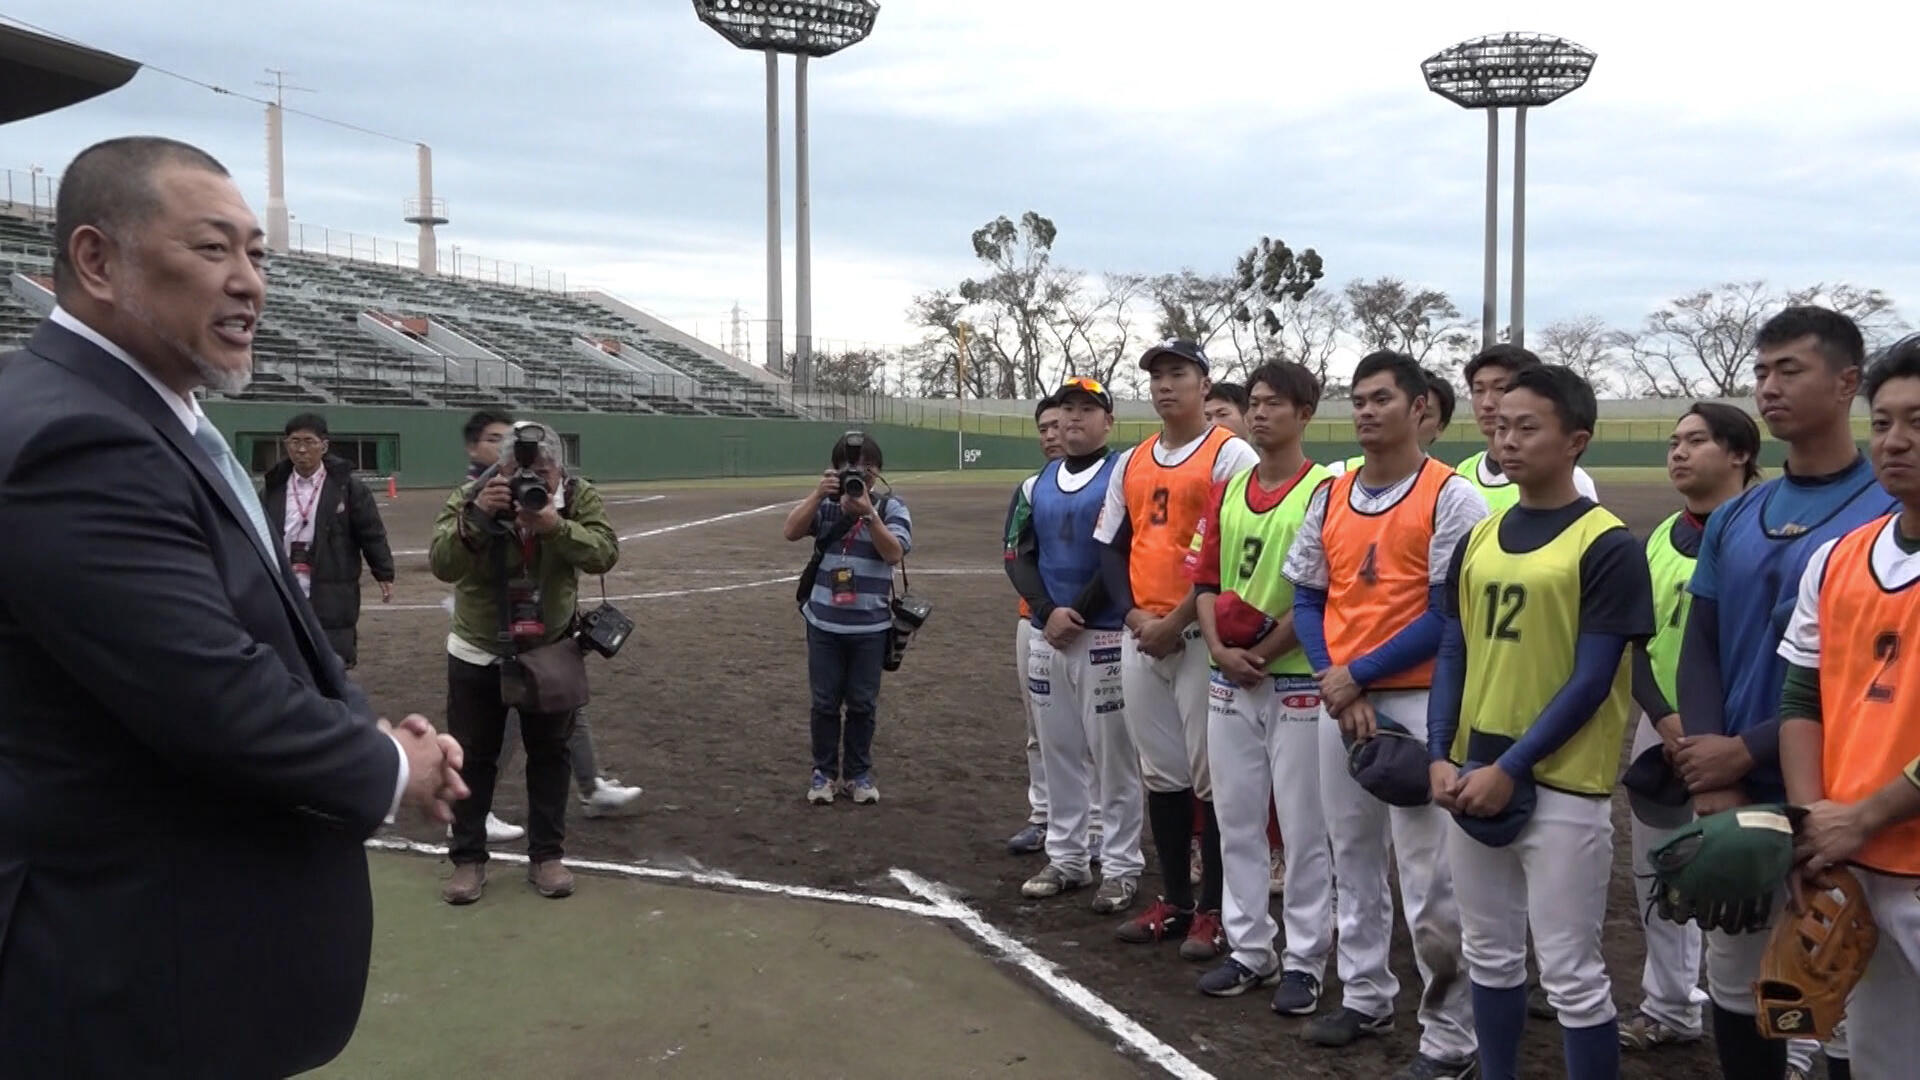 『WorldTryout2019』清原和博監督「野球を楽しむ選手たちが羨ましく感じた」